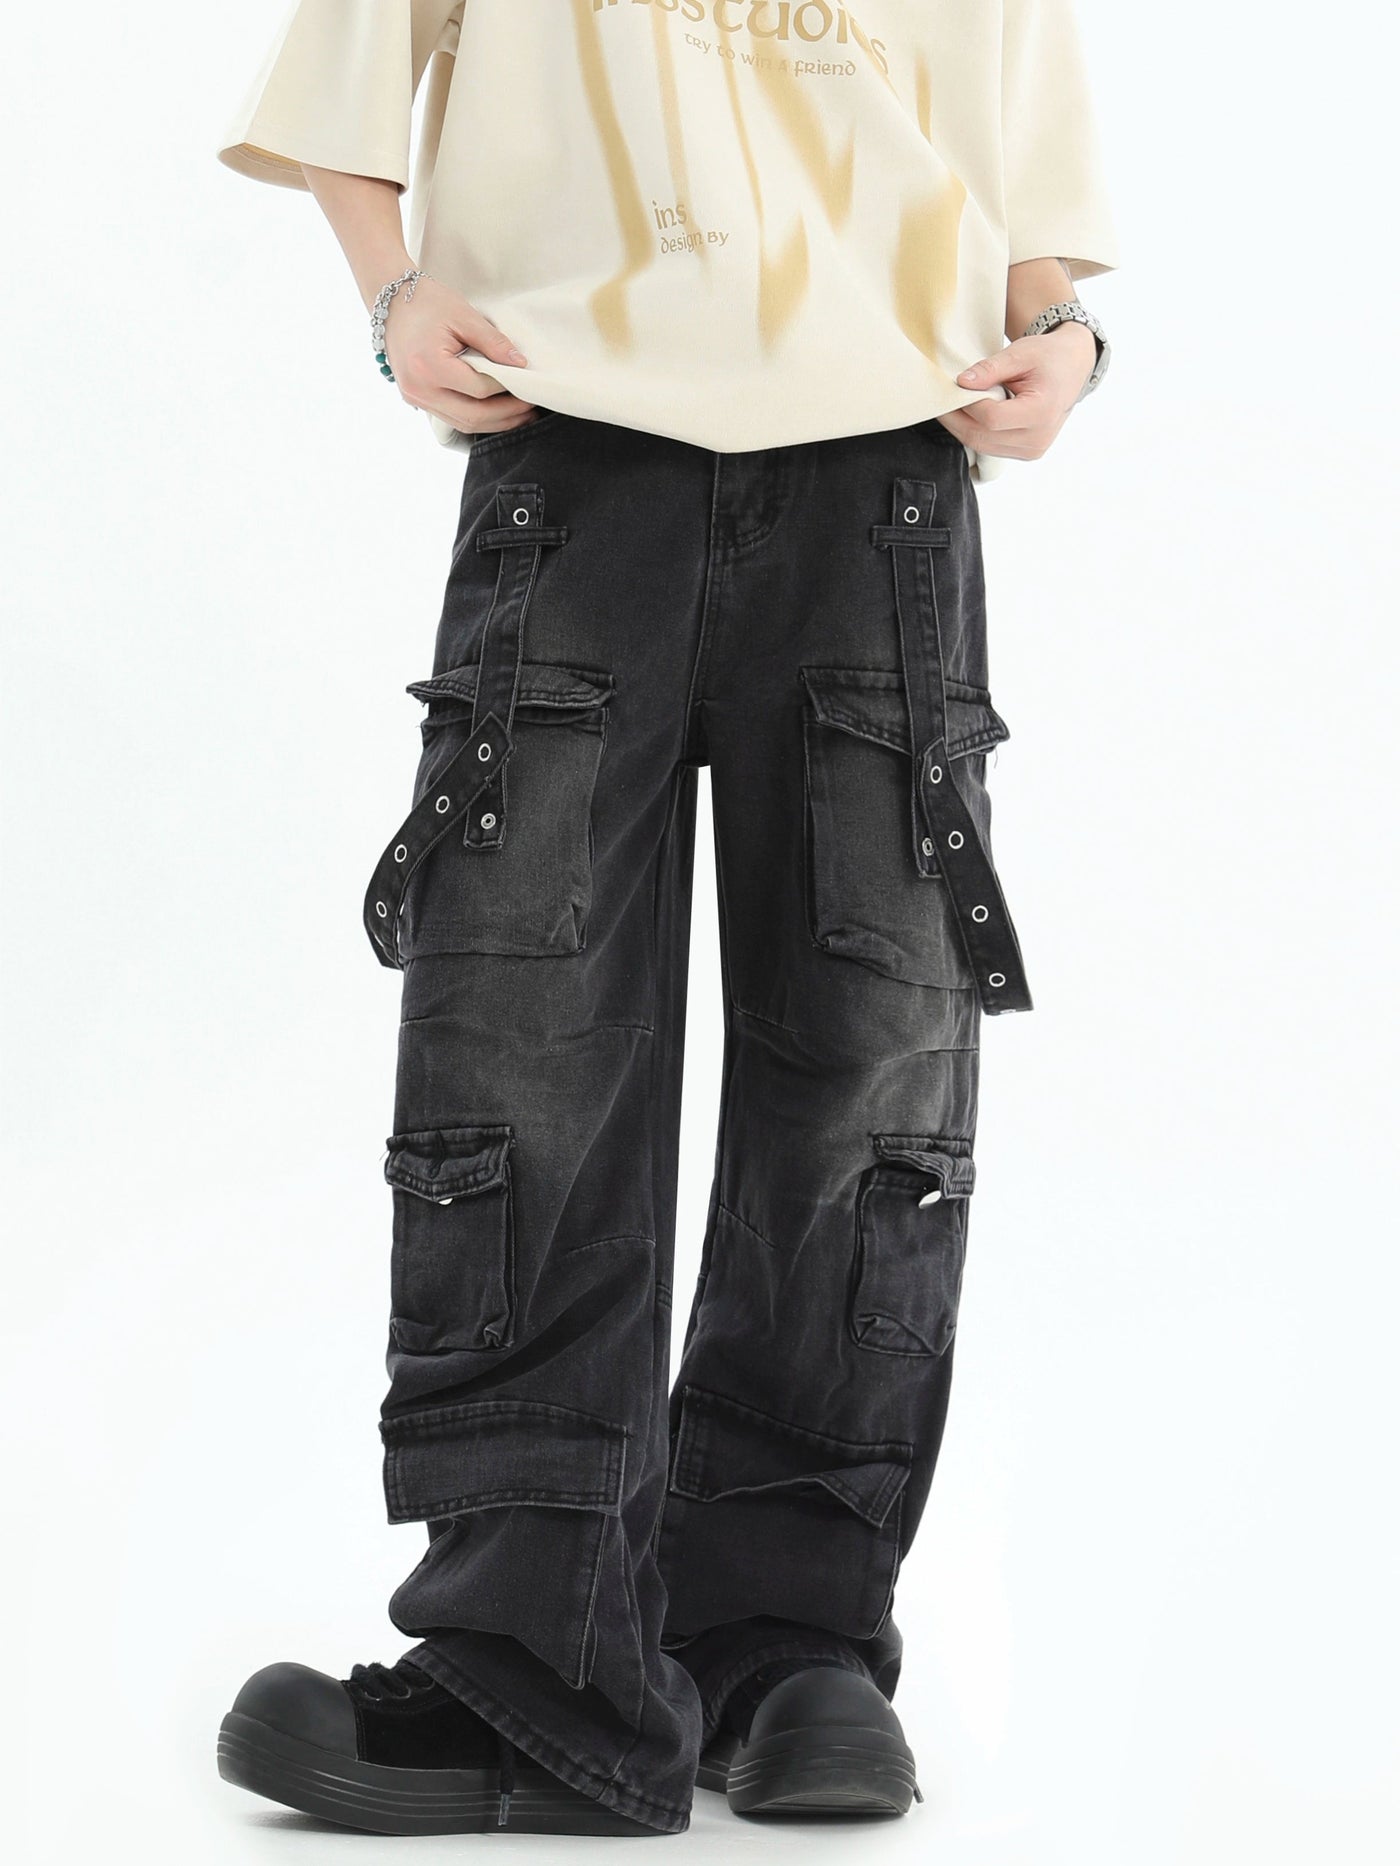 Multi-Straps Cargo Jeans Korean Street Fashion Jeans By INS Korea Shop Online at OH Vault